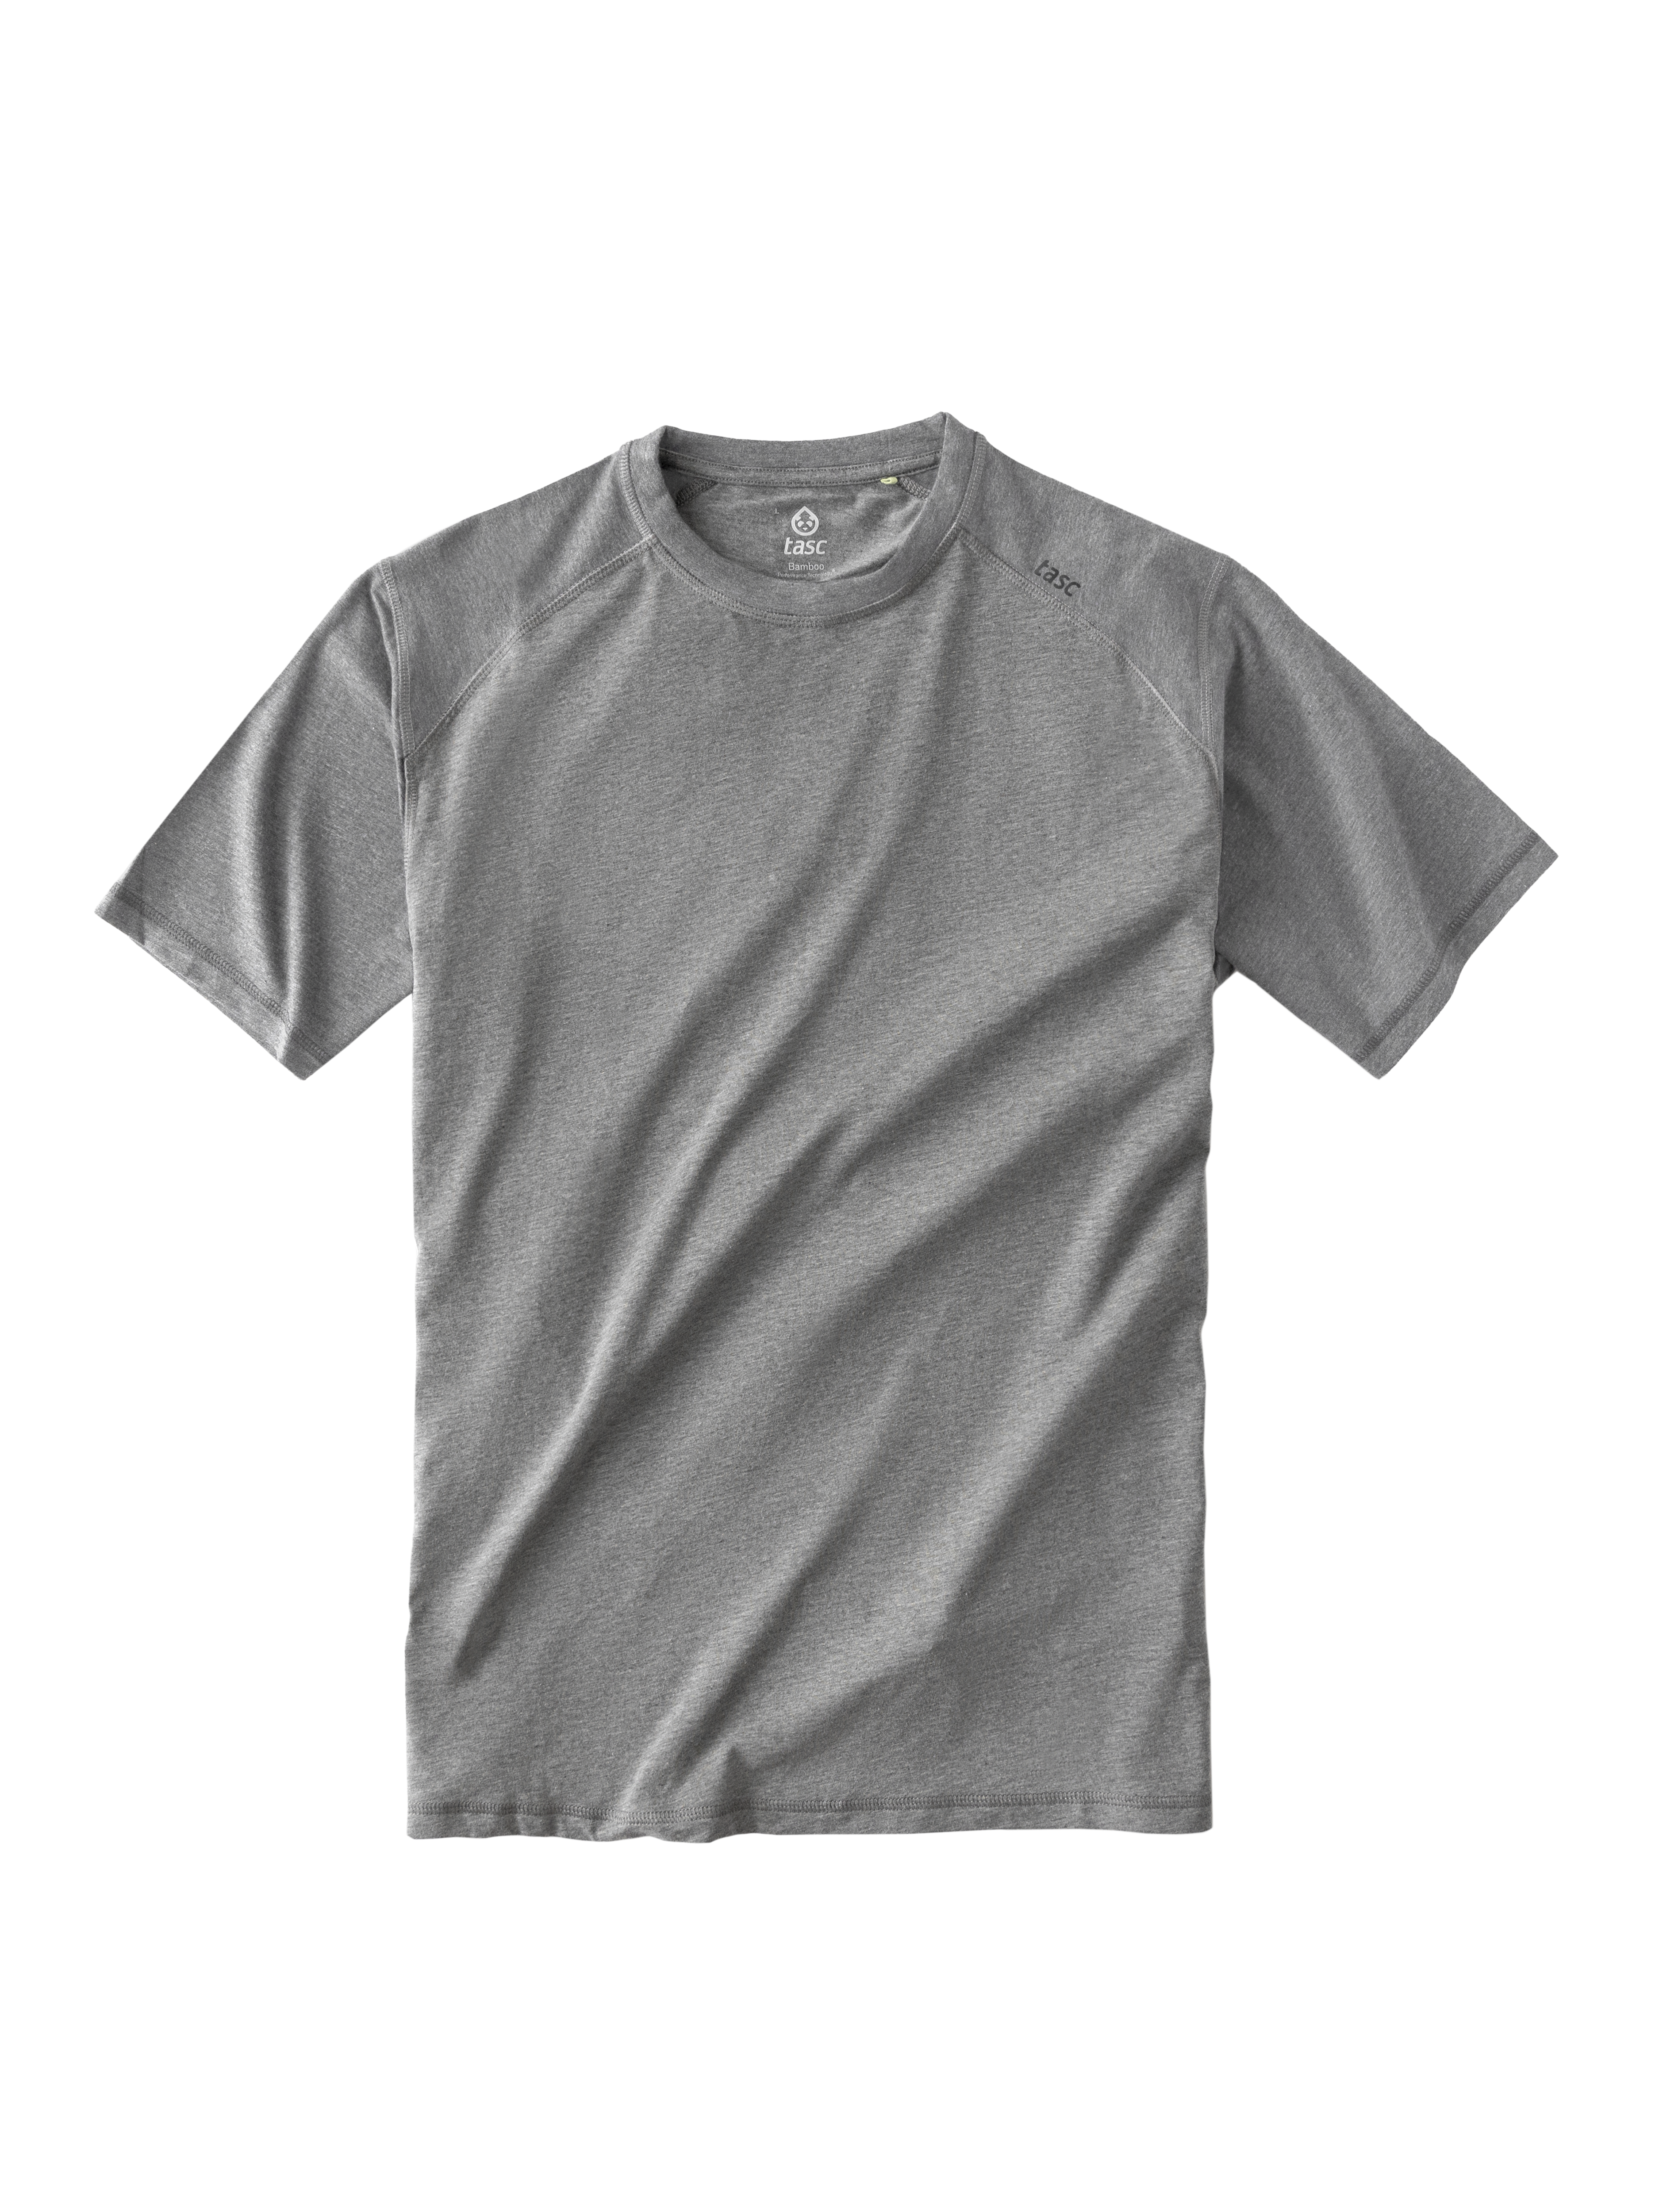 Tasc Men's Carrollton Fitness T-Shirt Apparel Tasc Heather Grey-059 Small 